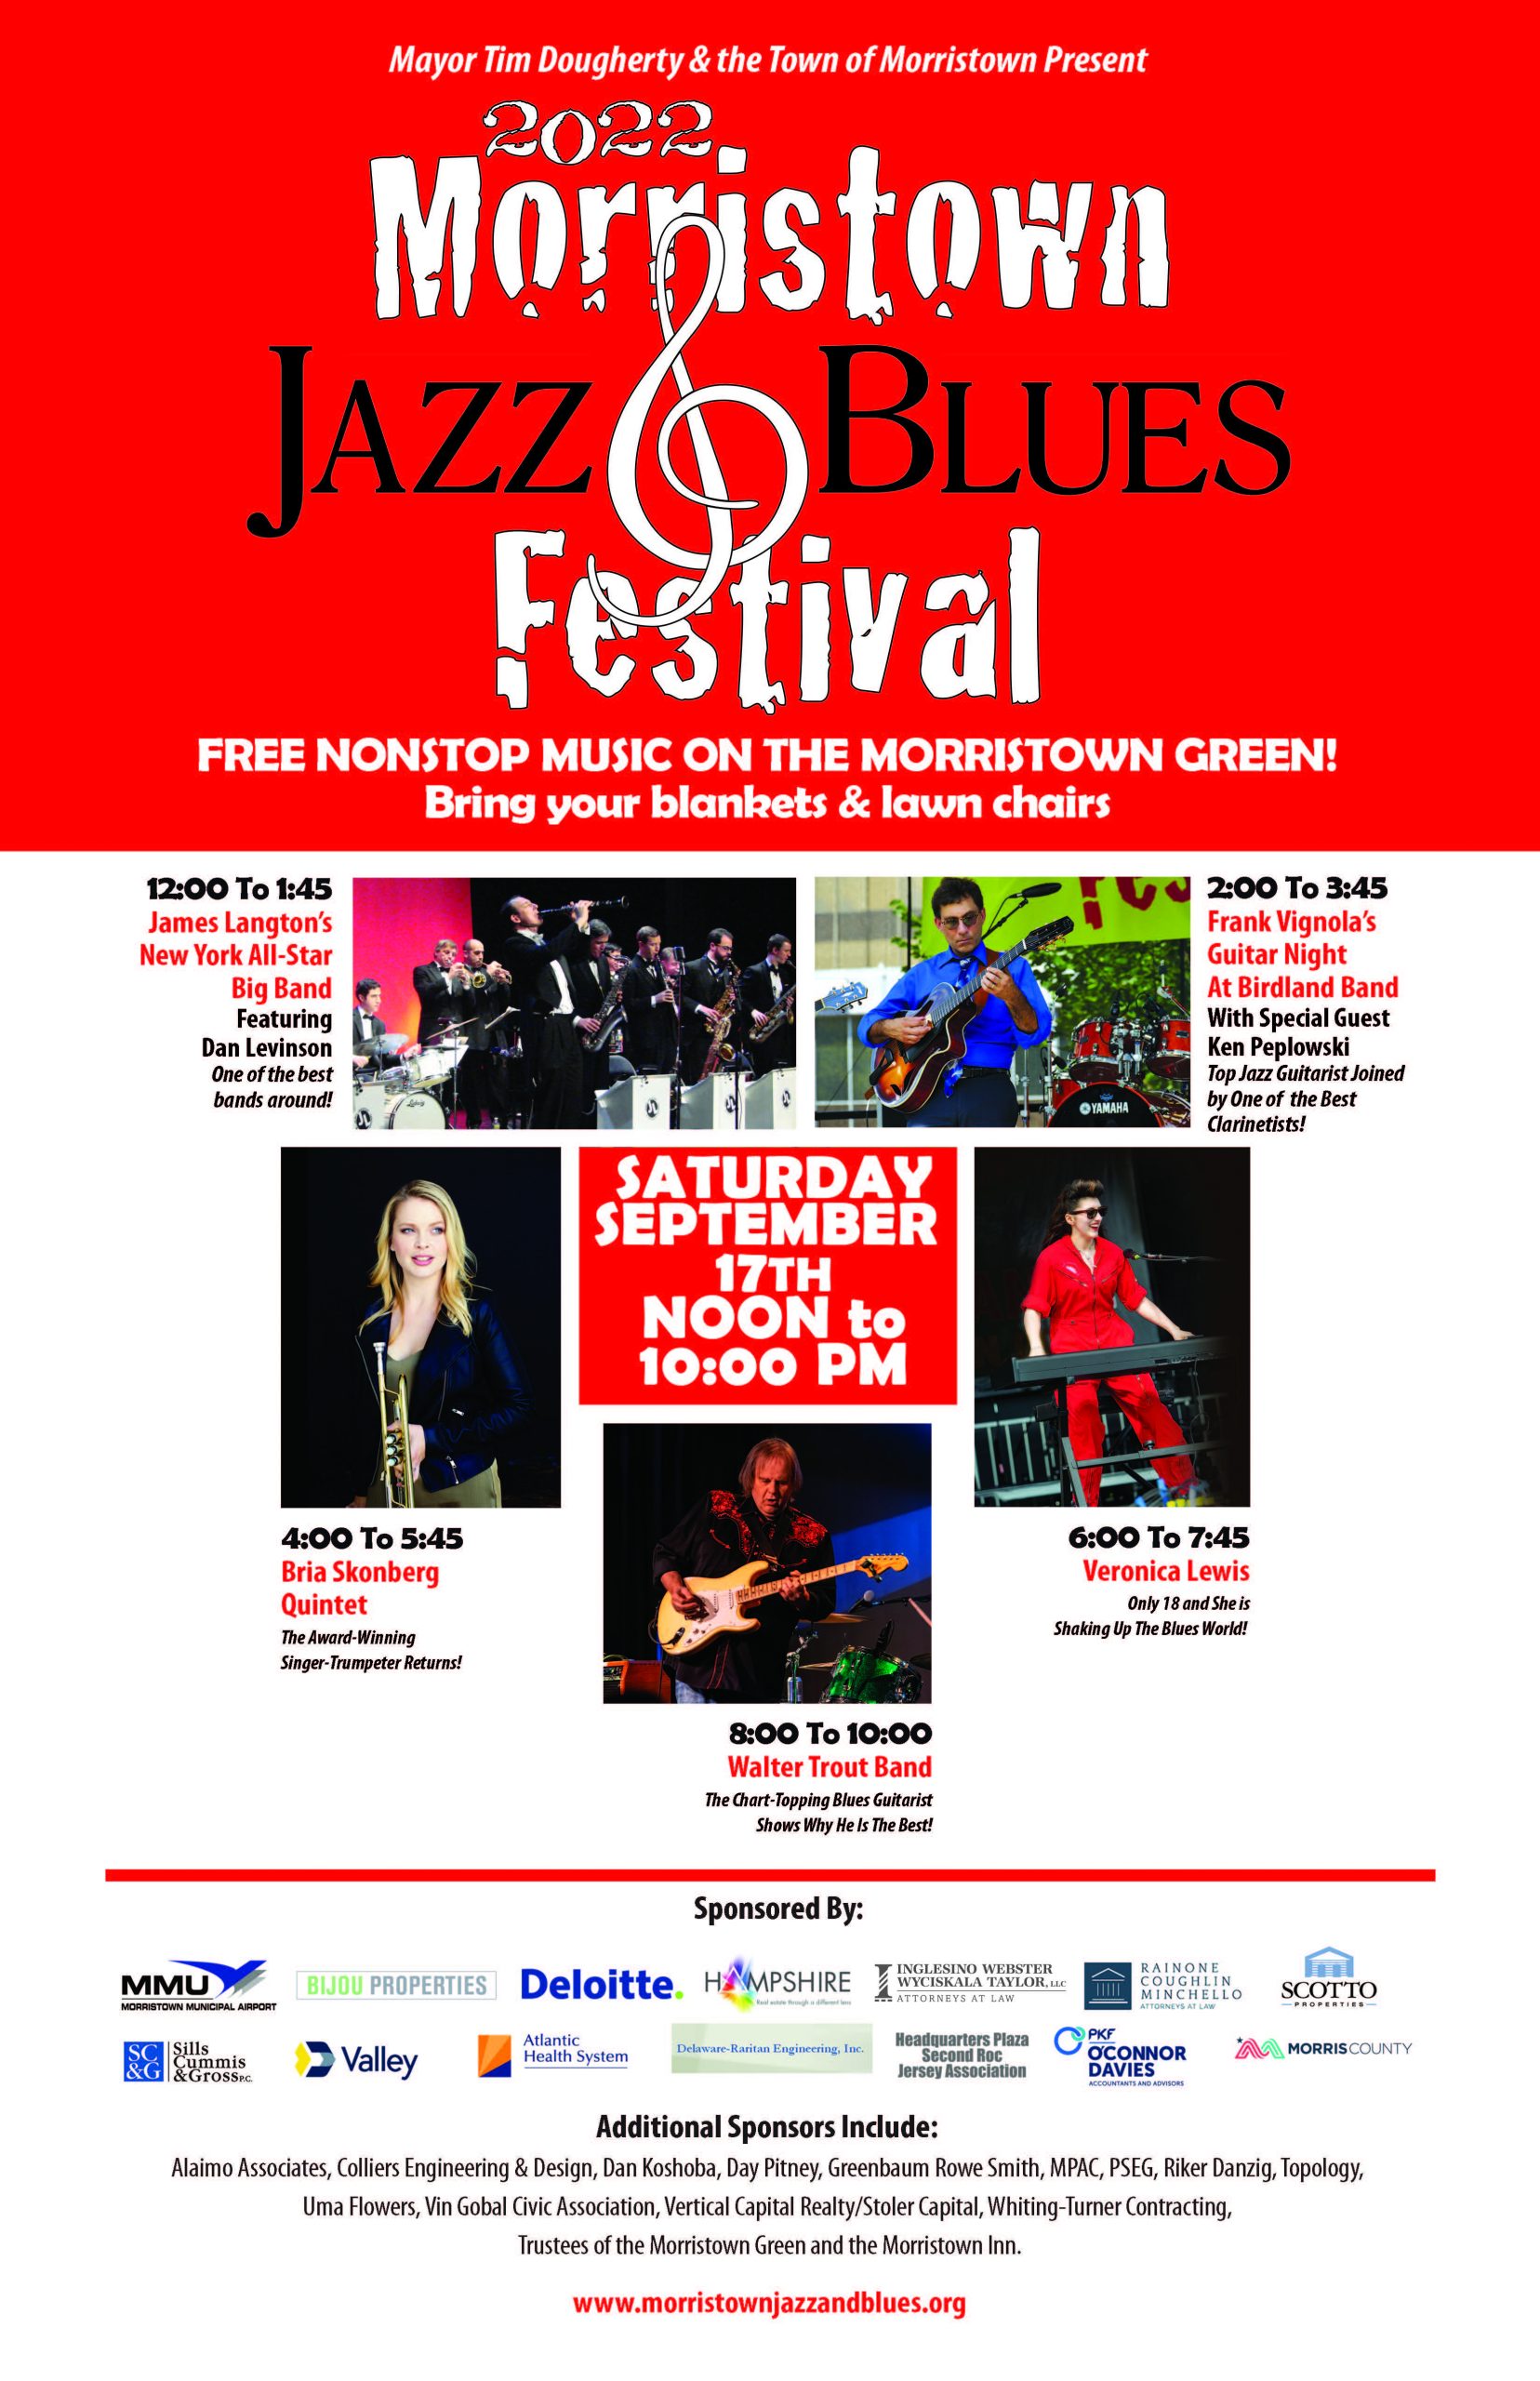 Morristown Jazz & Blues Festival Morristown Partnership